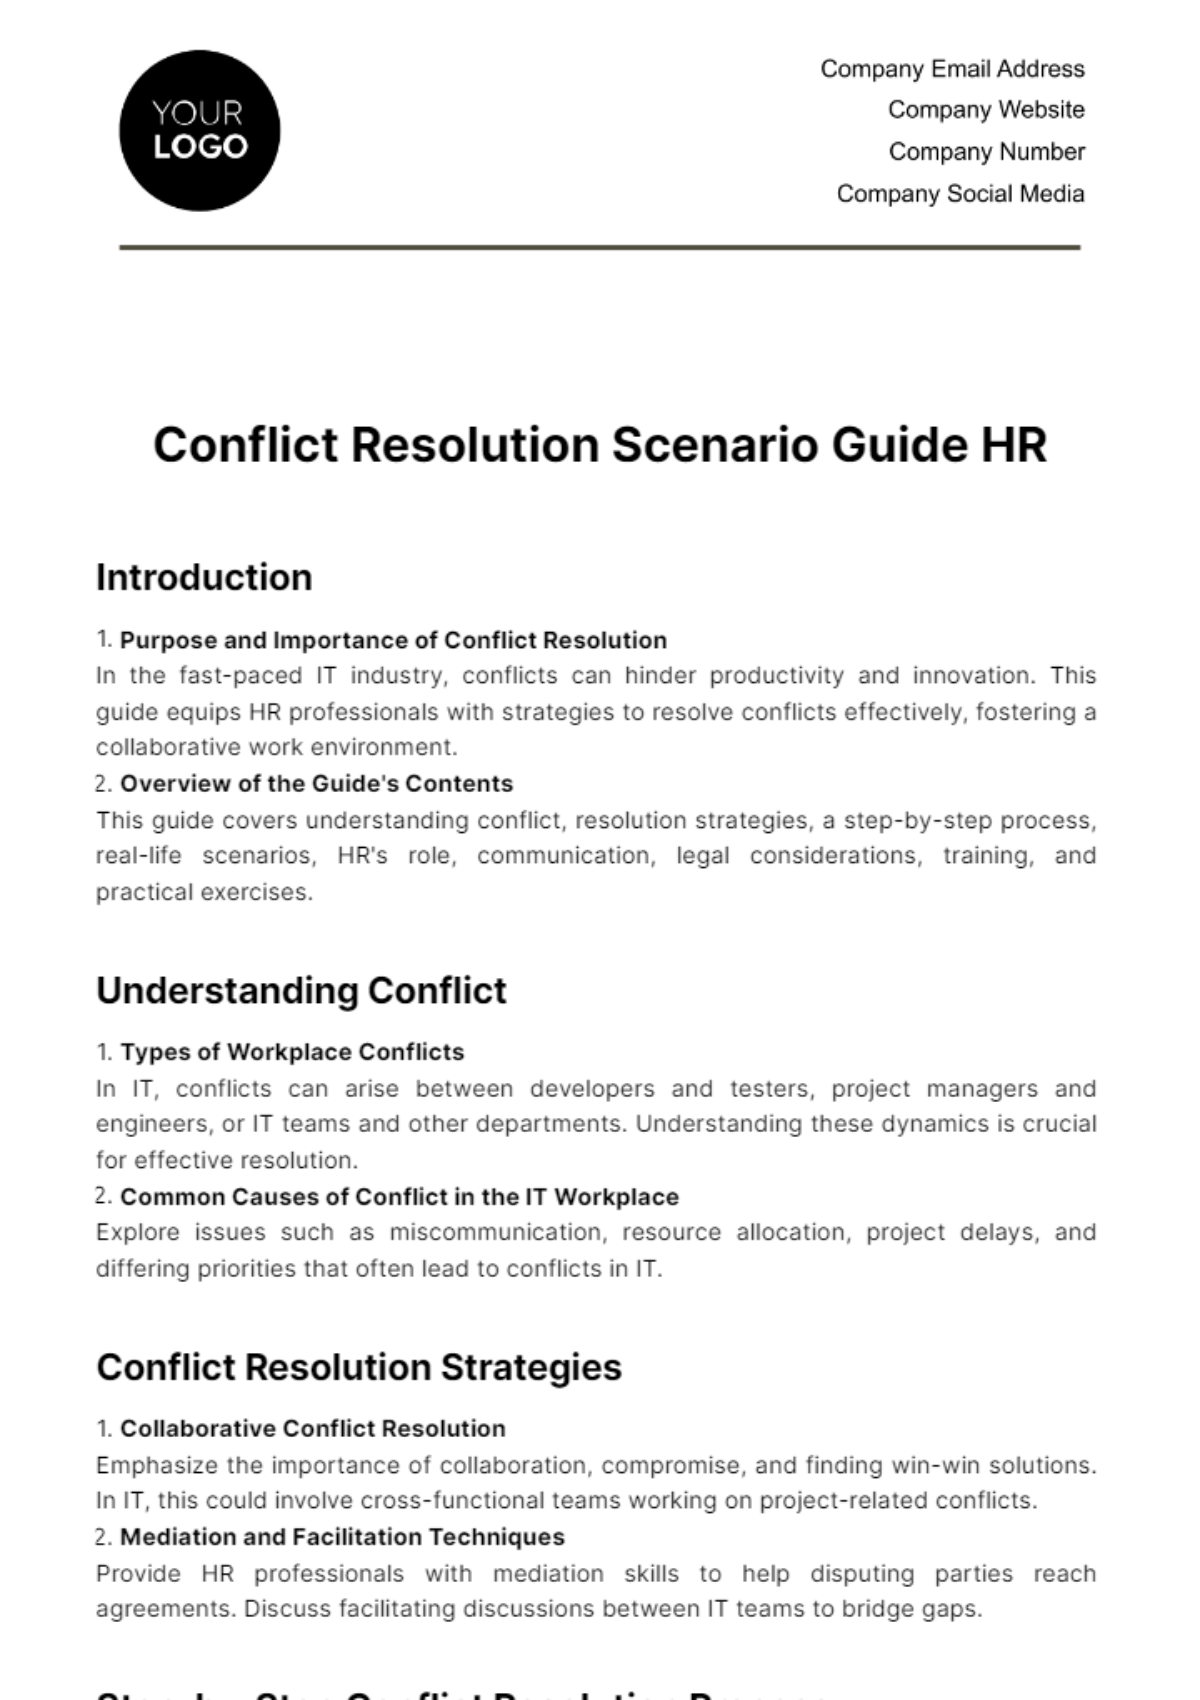 Conflict Resolution Scenario Guide HR Template